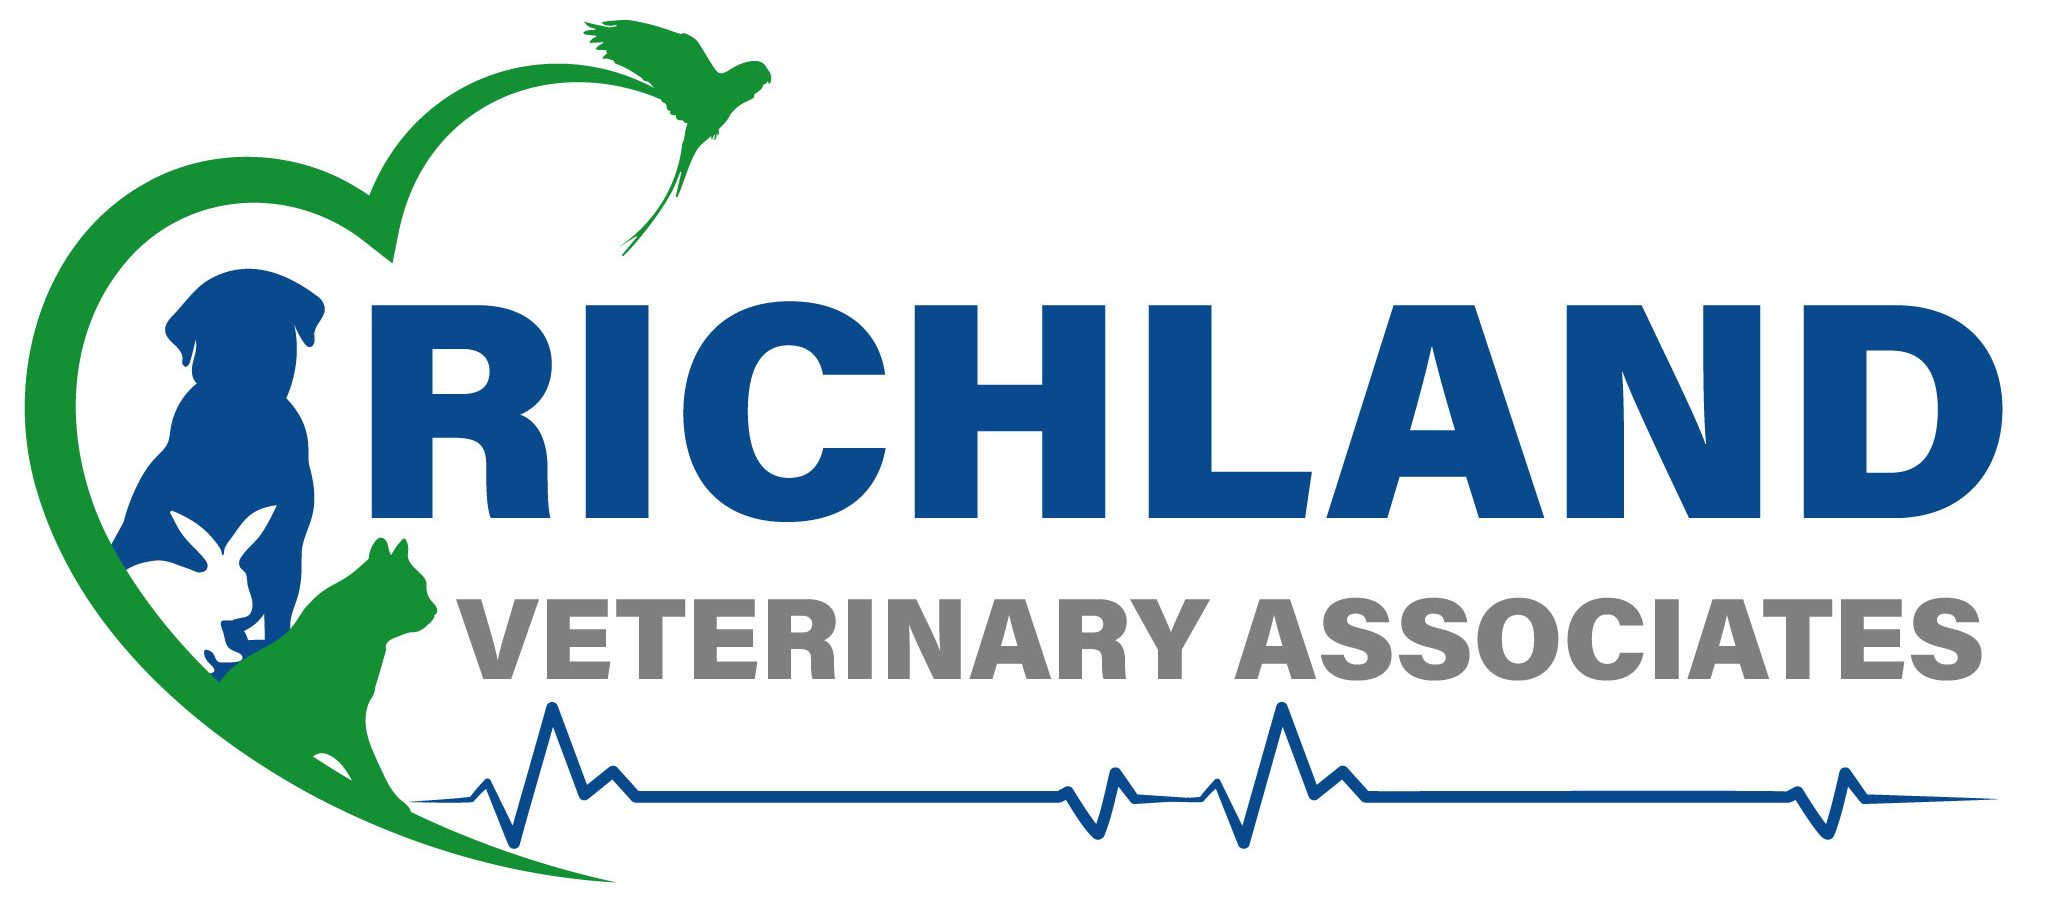 Richland Veterinary Associates